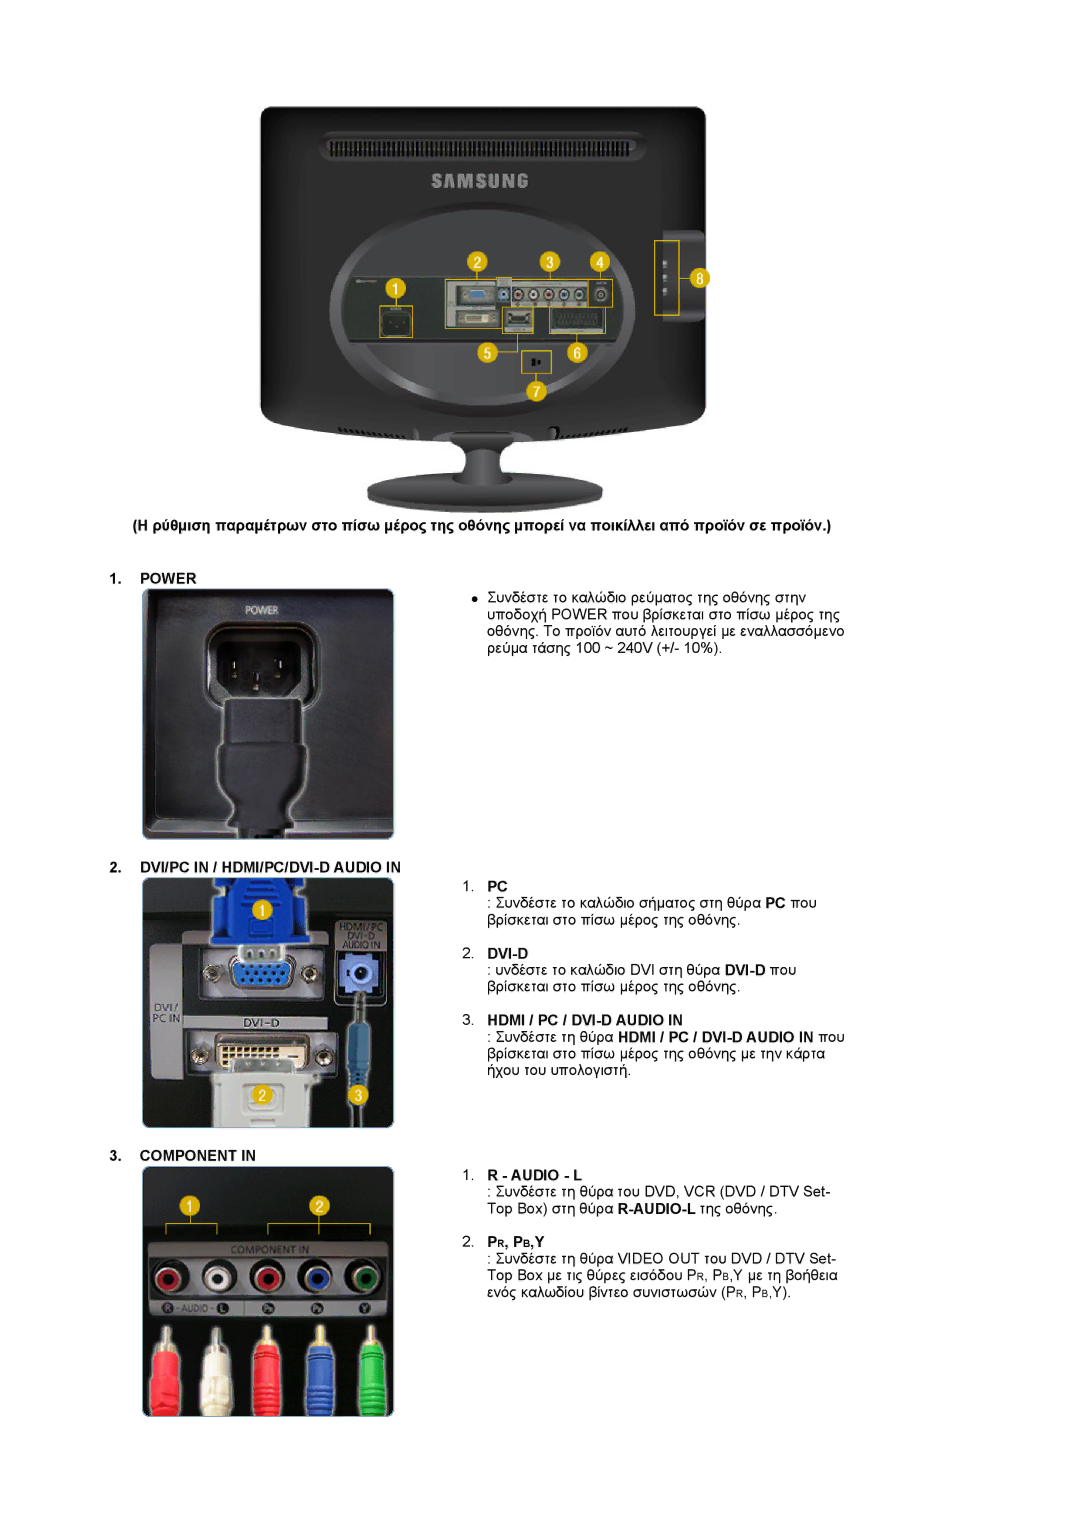 Samsung LS20PMASF/EDC, LS19PMASF/EDC manual Power, DVI/PC in / HDMI/PC/DVI-D Audio, Hdmi / PC / DVI-D Audio, Component 